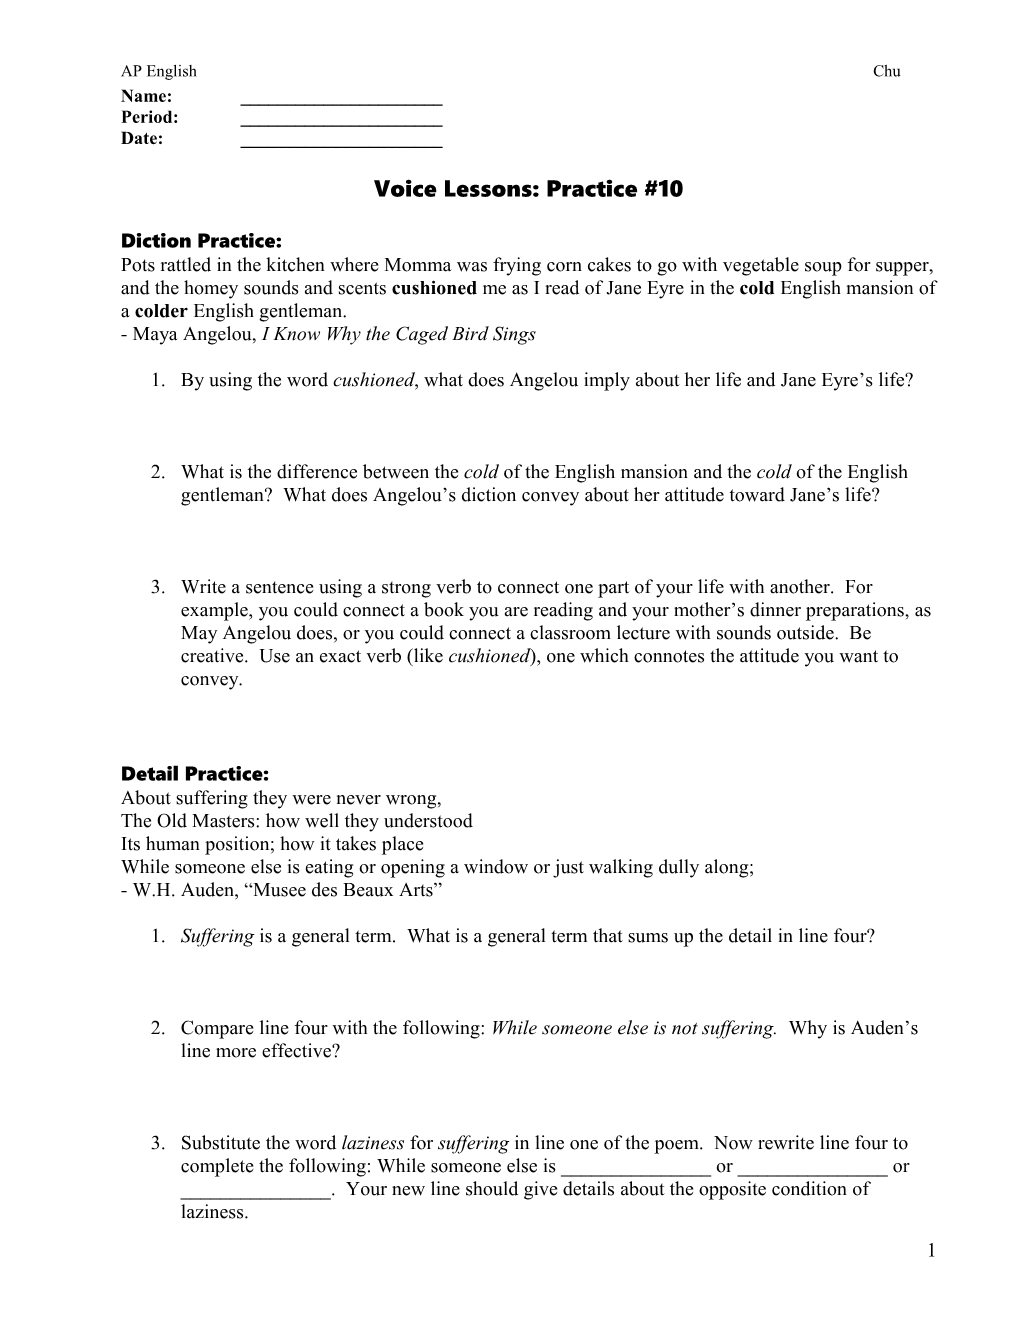 Voice Lessons: Practice #10